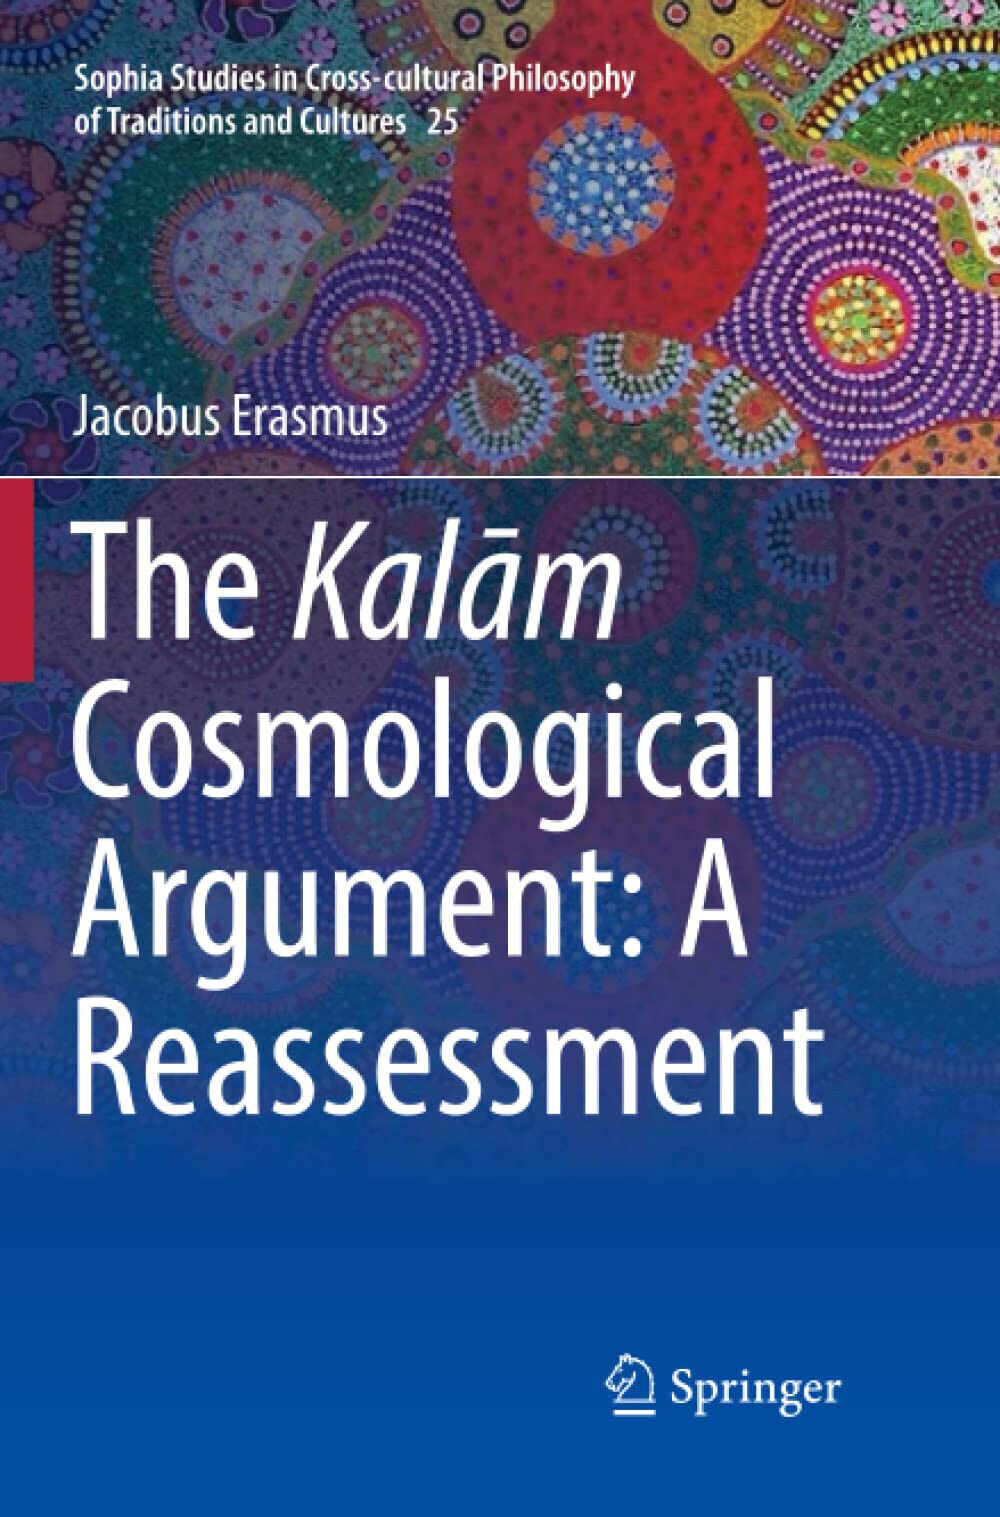 The Kalam Cosmological Argument: A Reassessment - Jacobus Erasmus - 2019